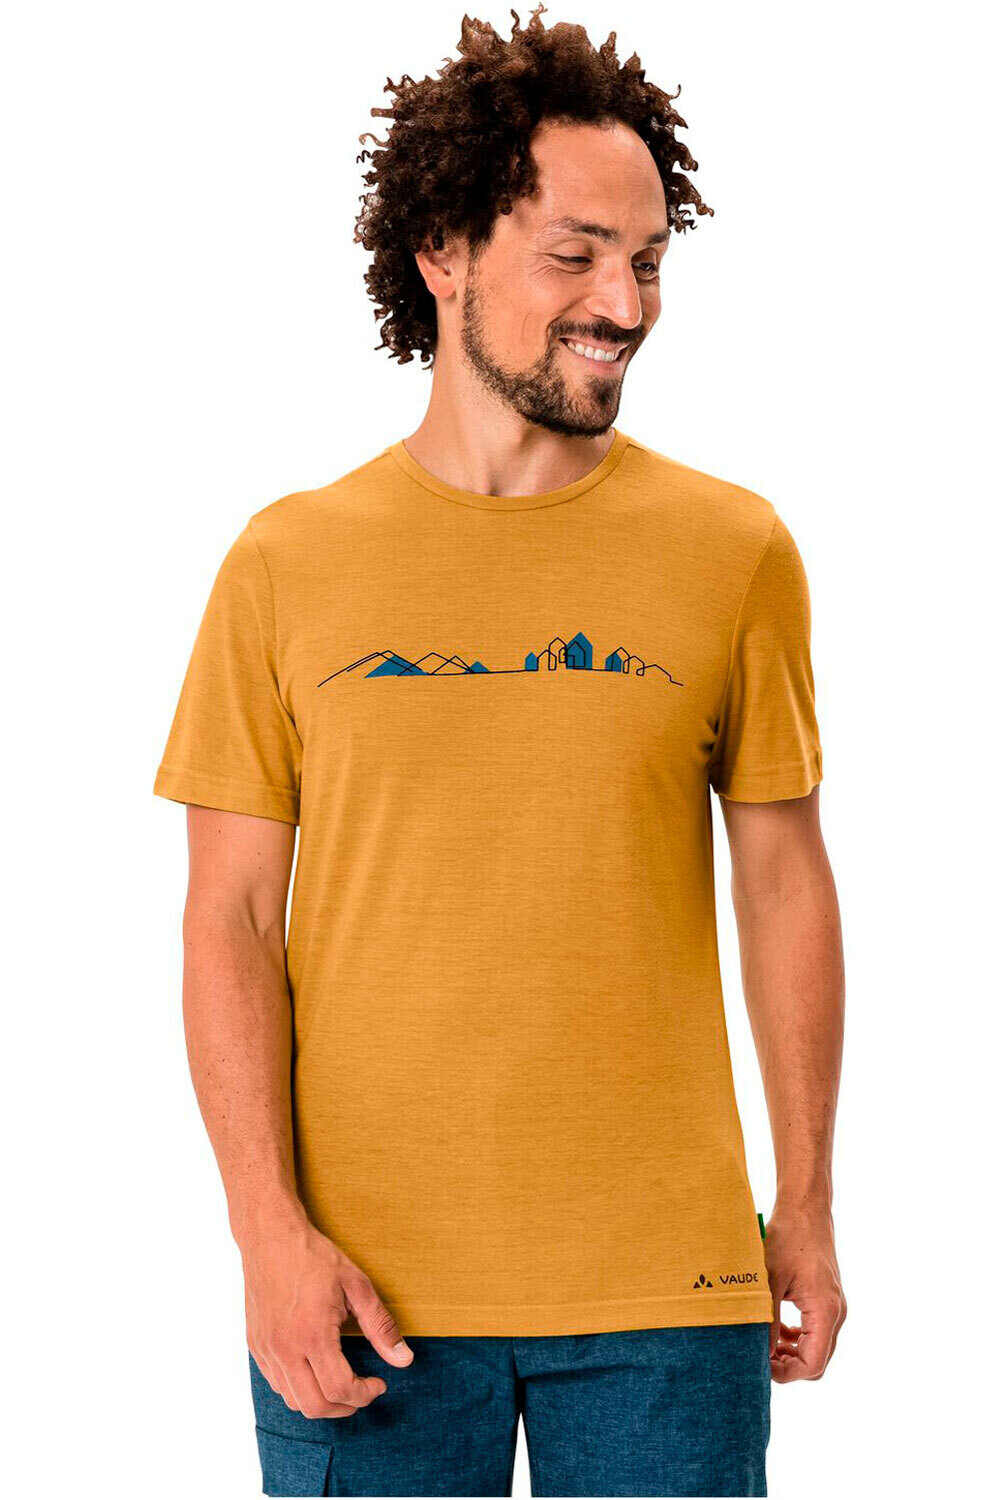 Vaude camiseta montaña manga corta hombre Men's Redmont T-Shirt II vista frontal